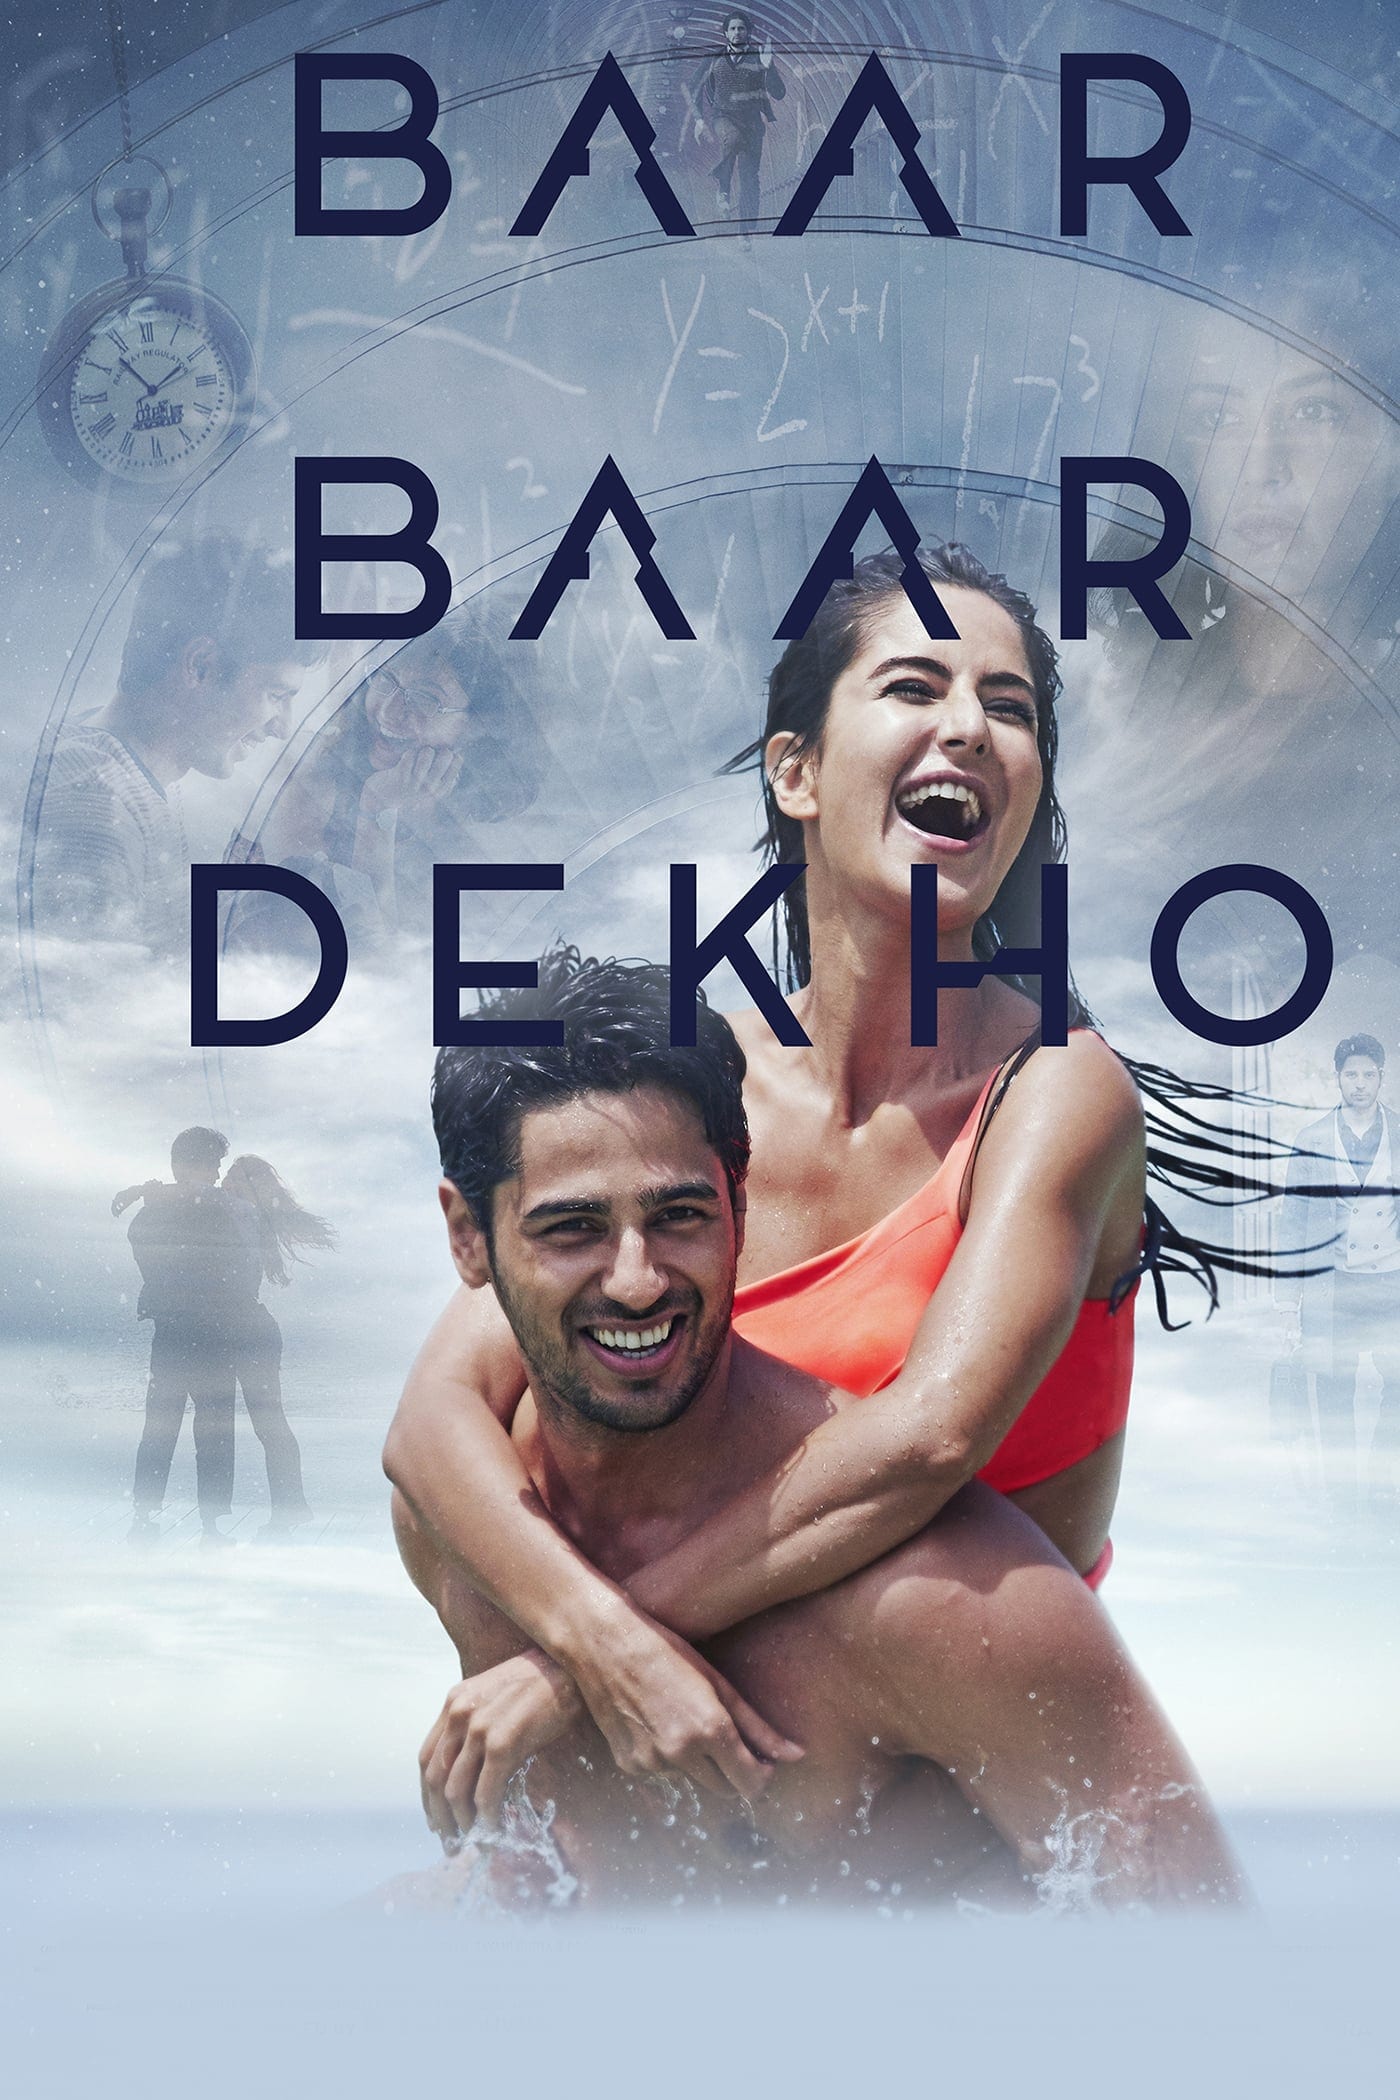 Poster for the movie "Baar Baar Dekho"